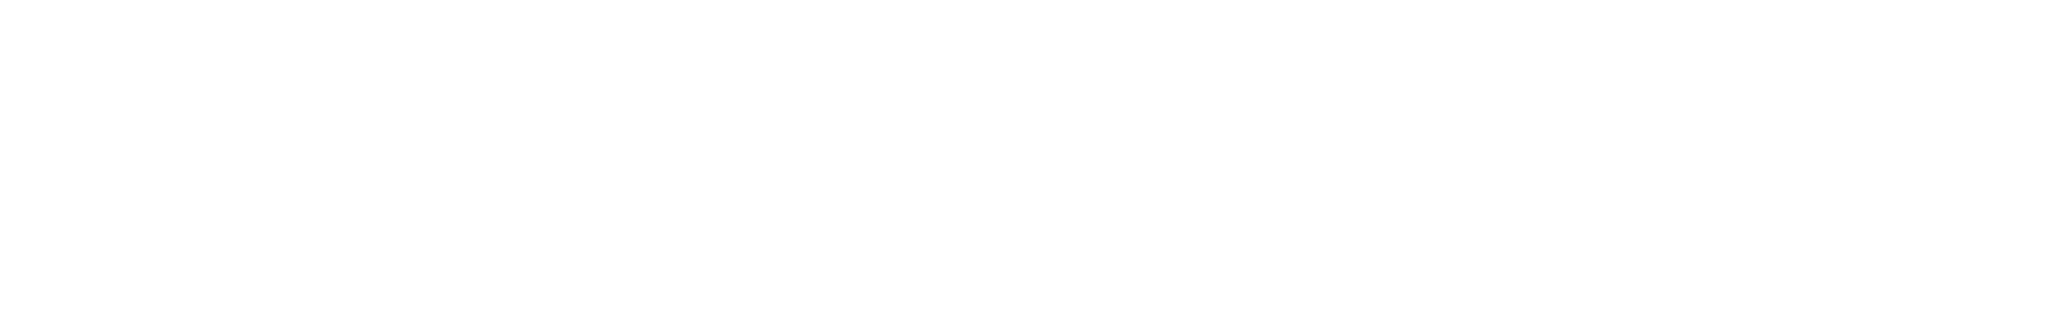 HarperCollins Publishers Case Study logo